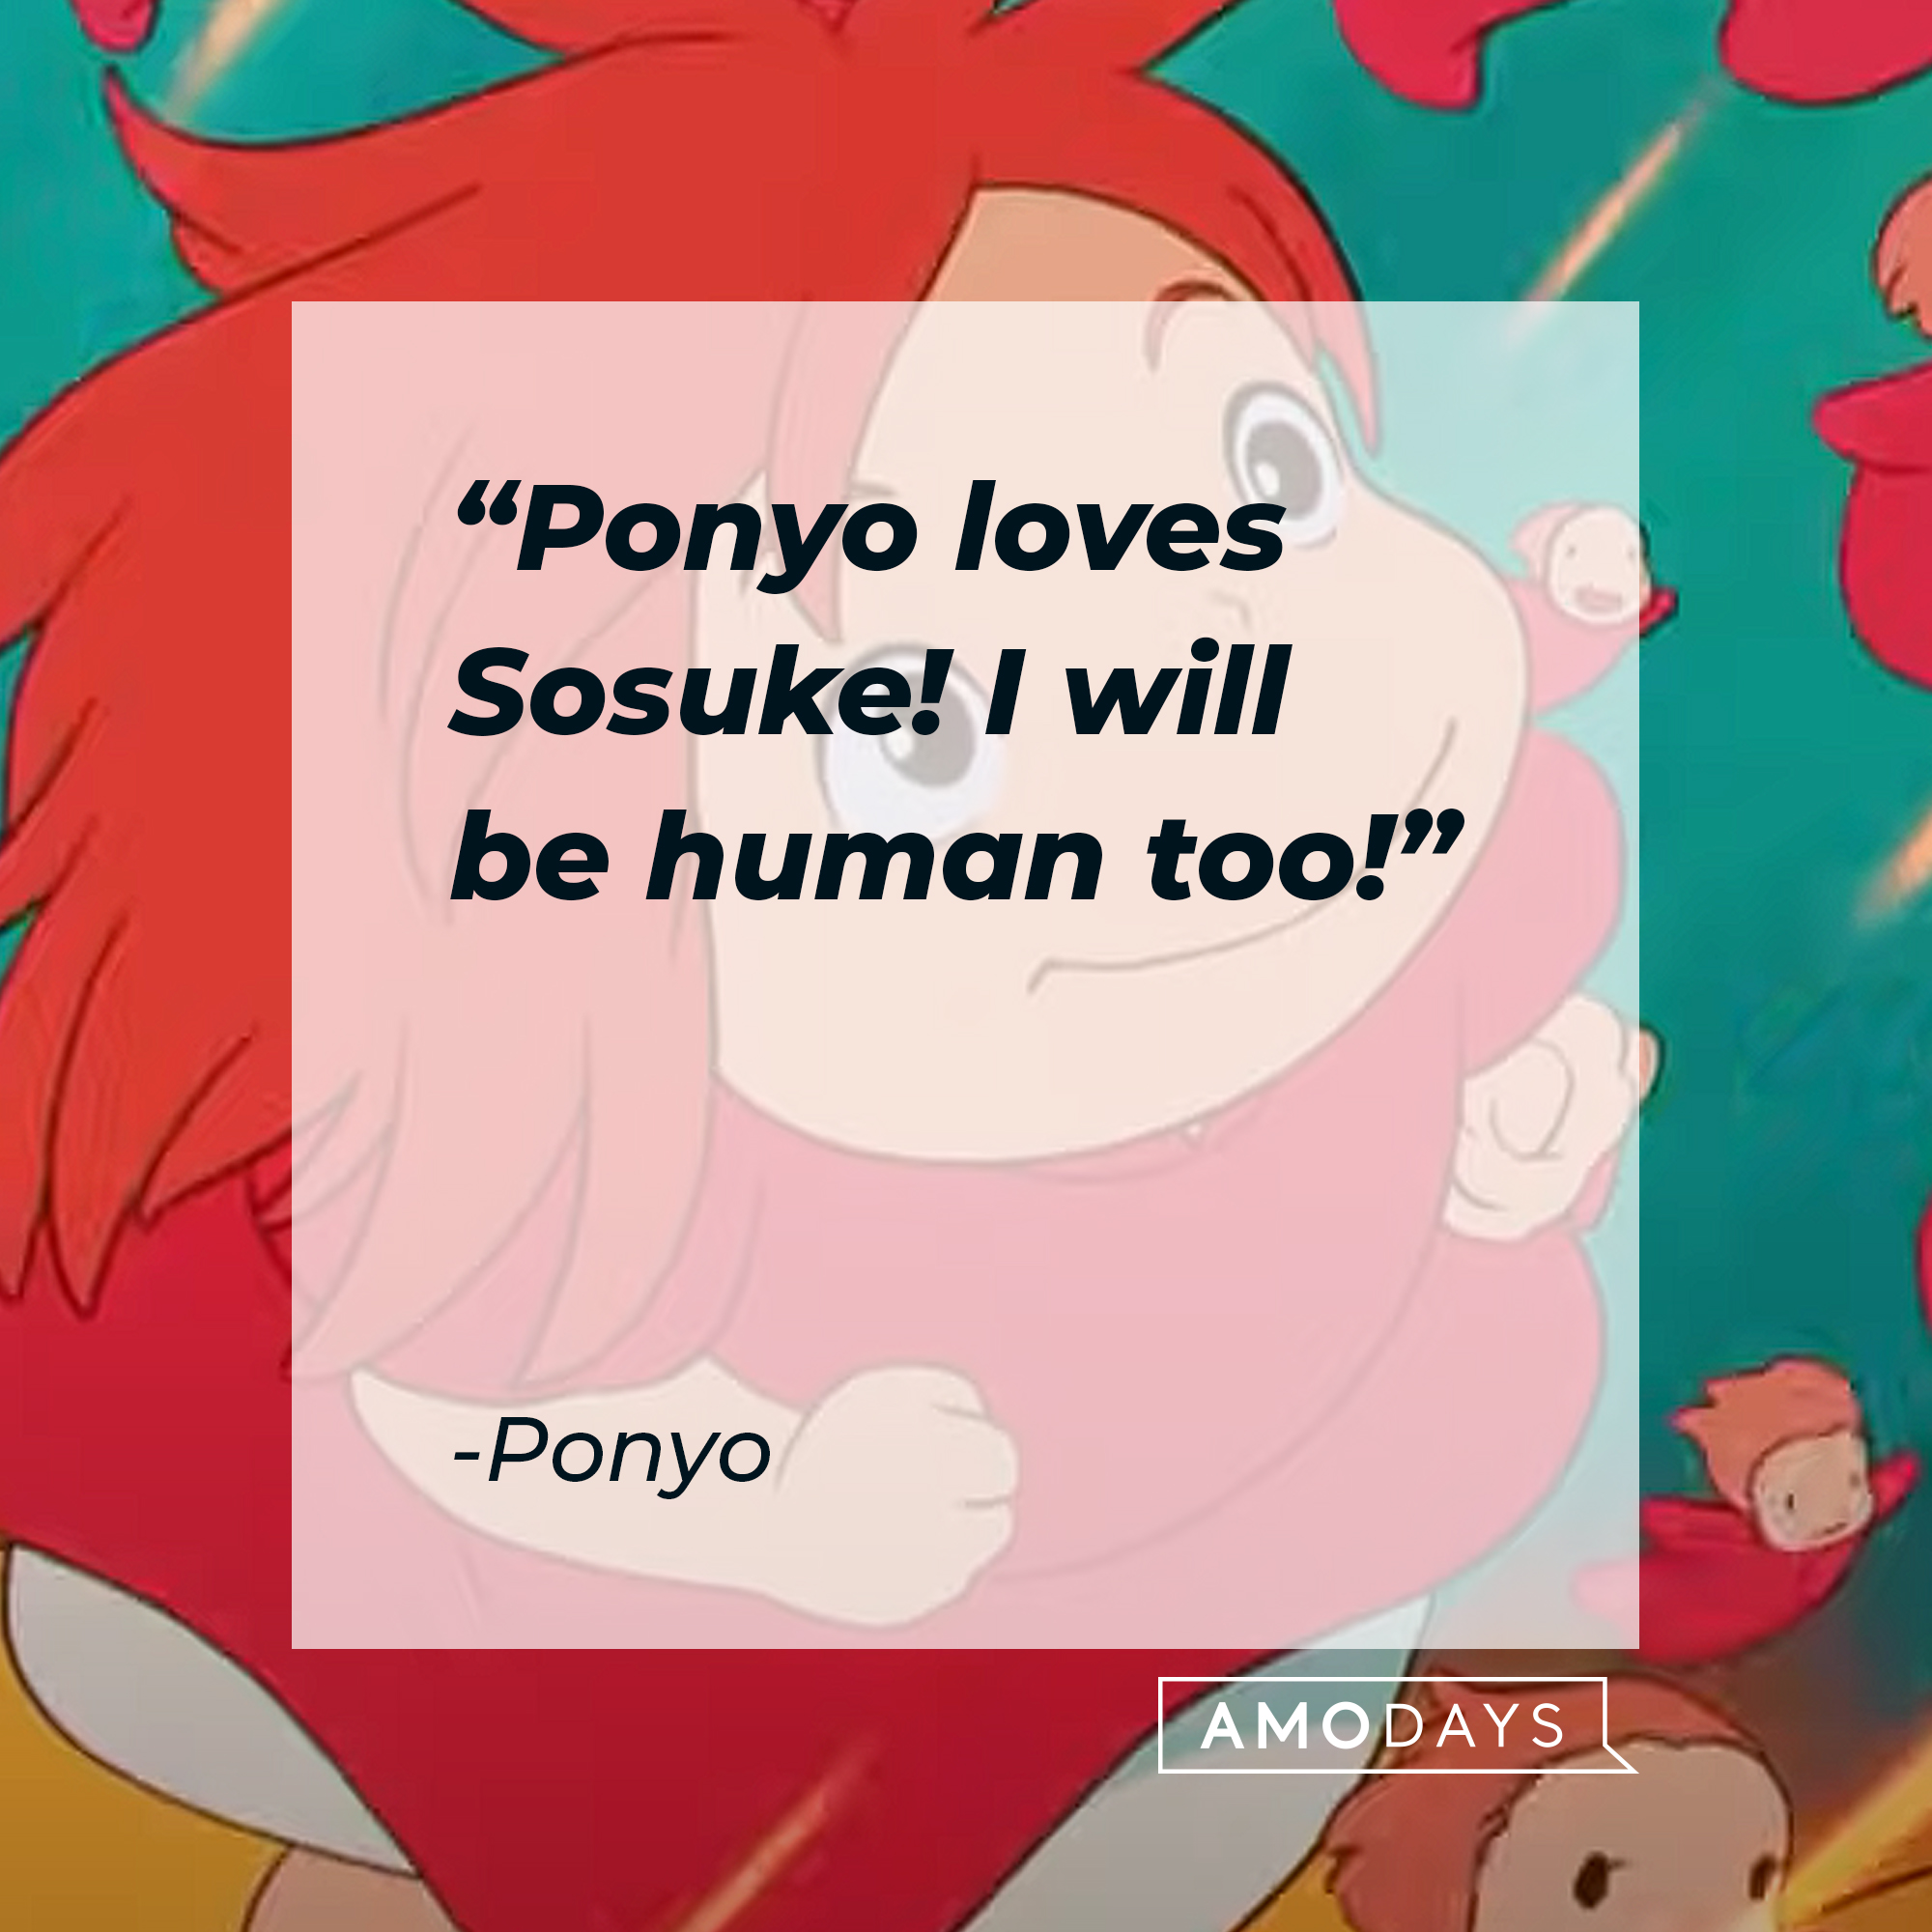 Ponyo's quote: "Ponyo loves Sosuke! I will be human too!" | Source: Youtube.com/crunchyrollstoreau